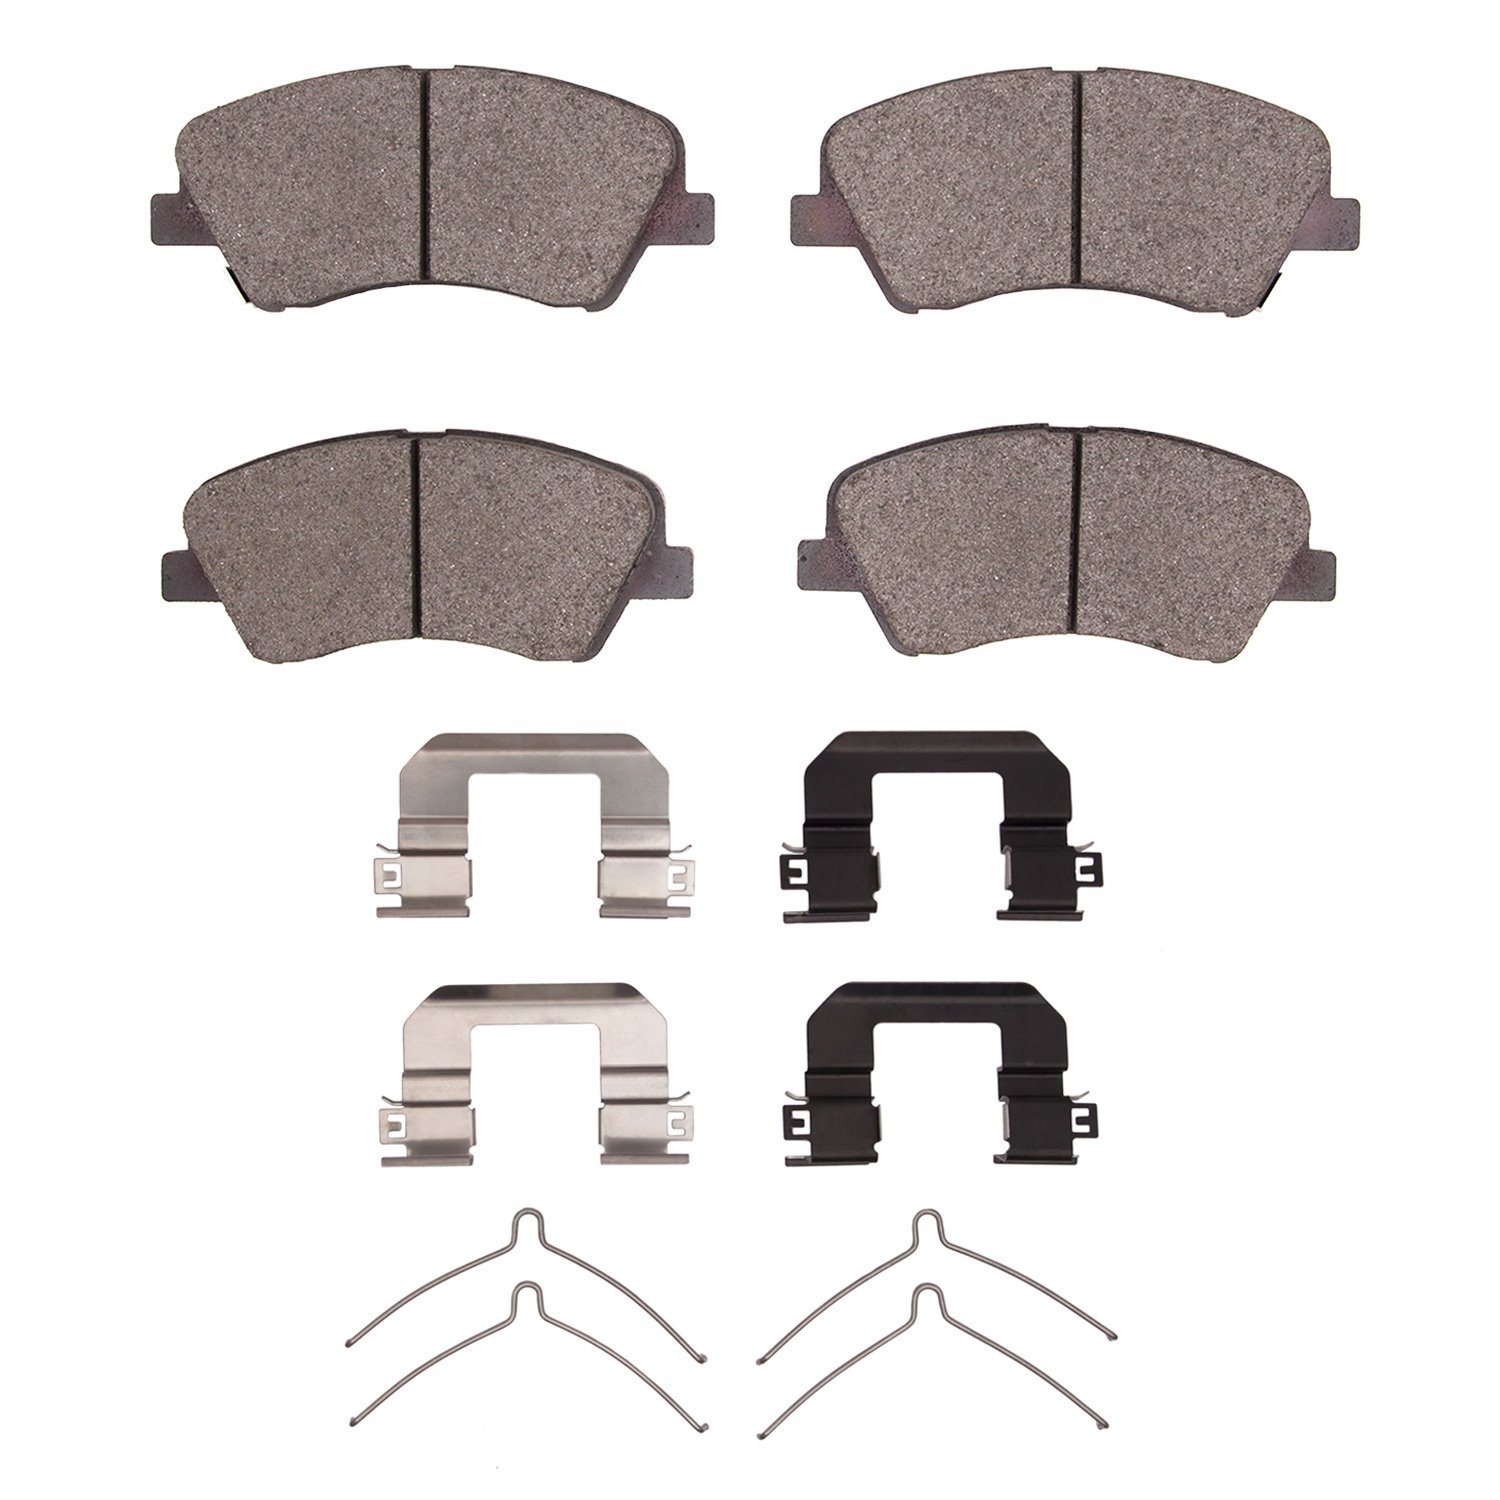 1310-2190-01 3000-Series Ceramic Brake Pads & Hardware Kit, Fits Select Kia/Hyundai/Genesis, Position: Front